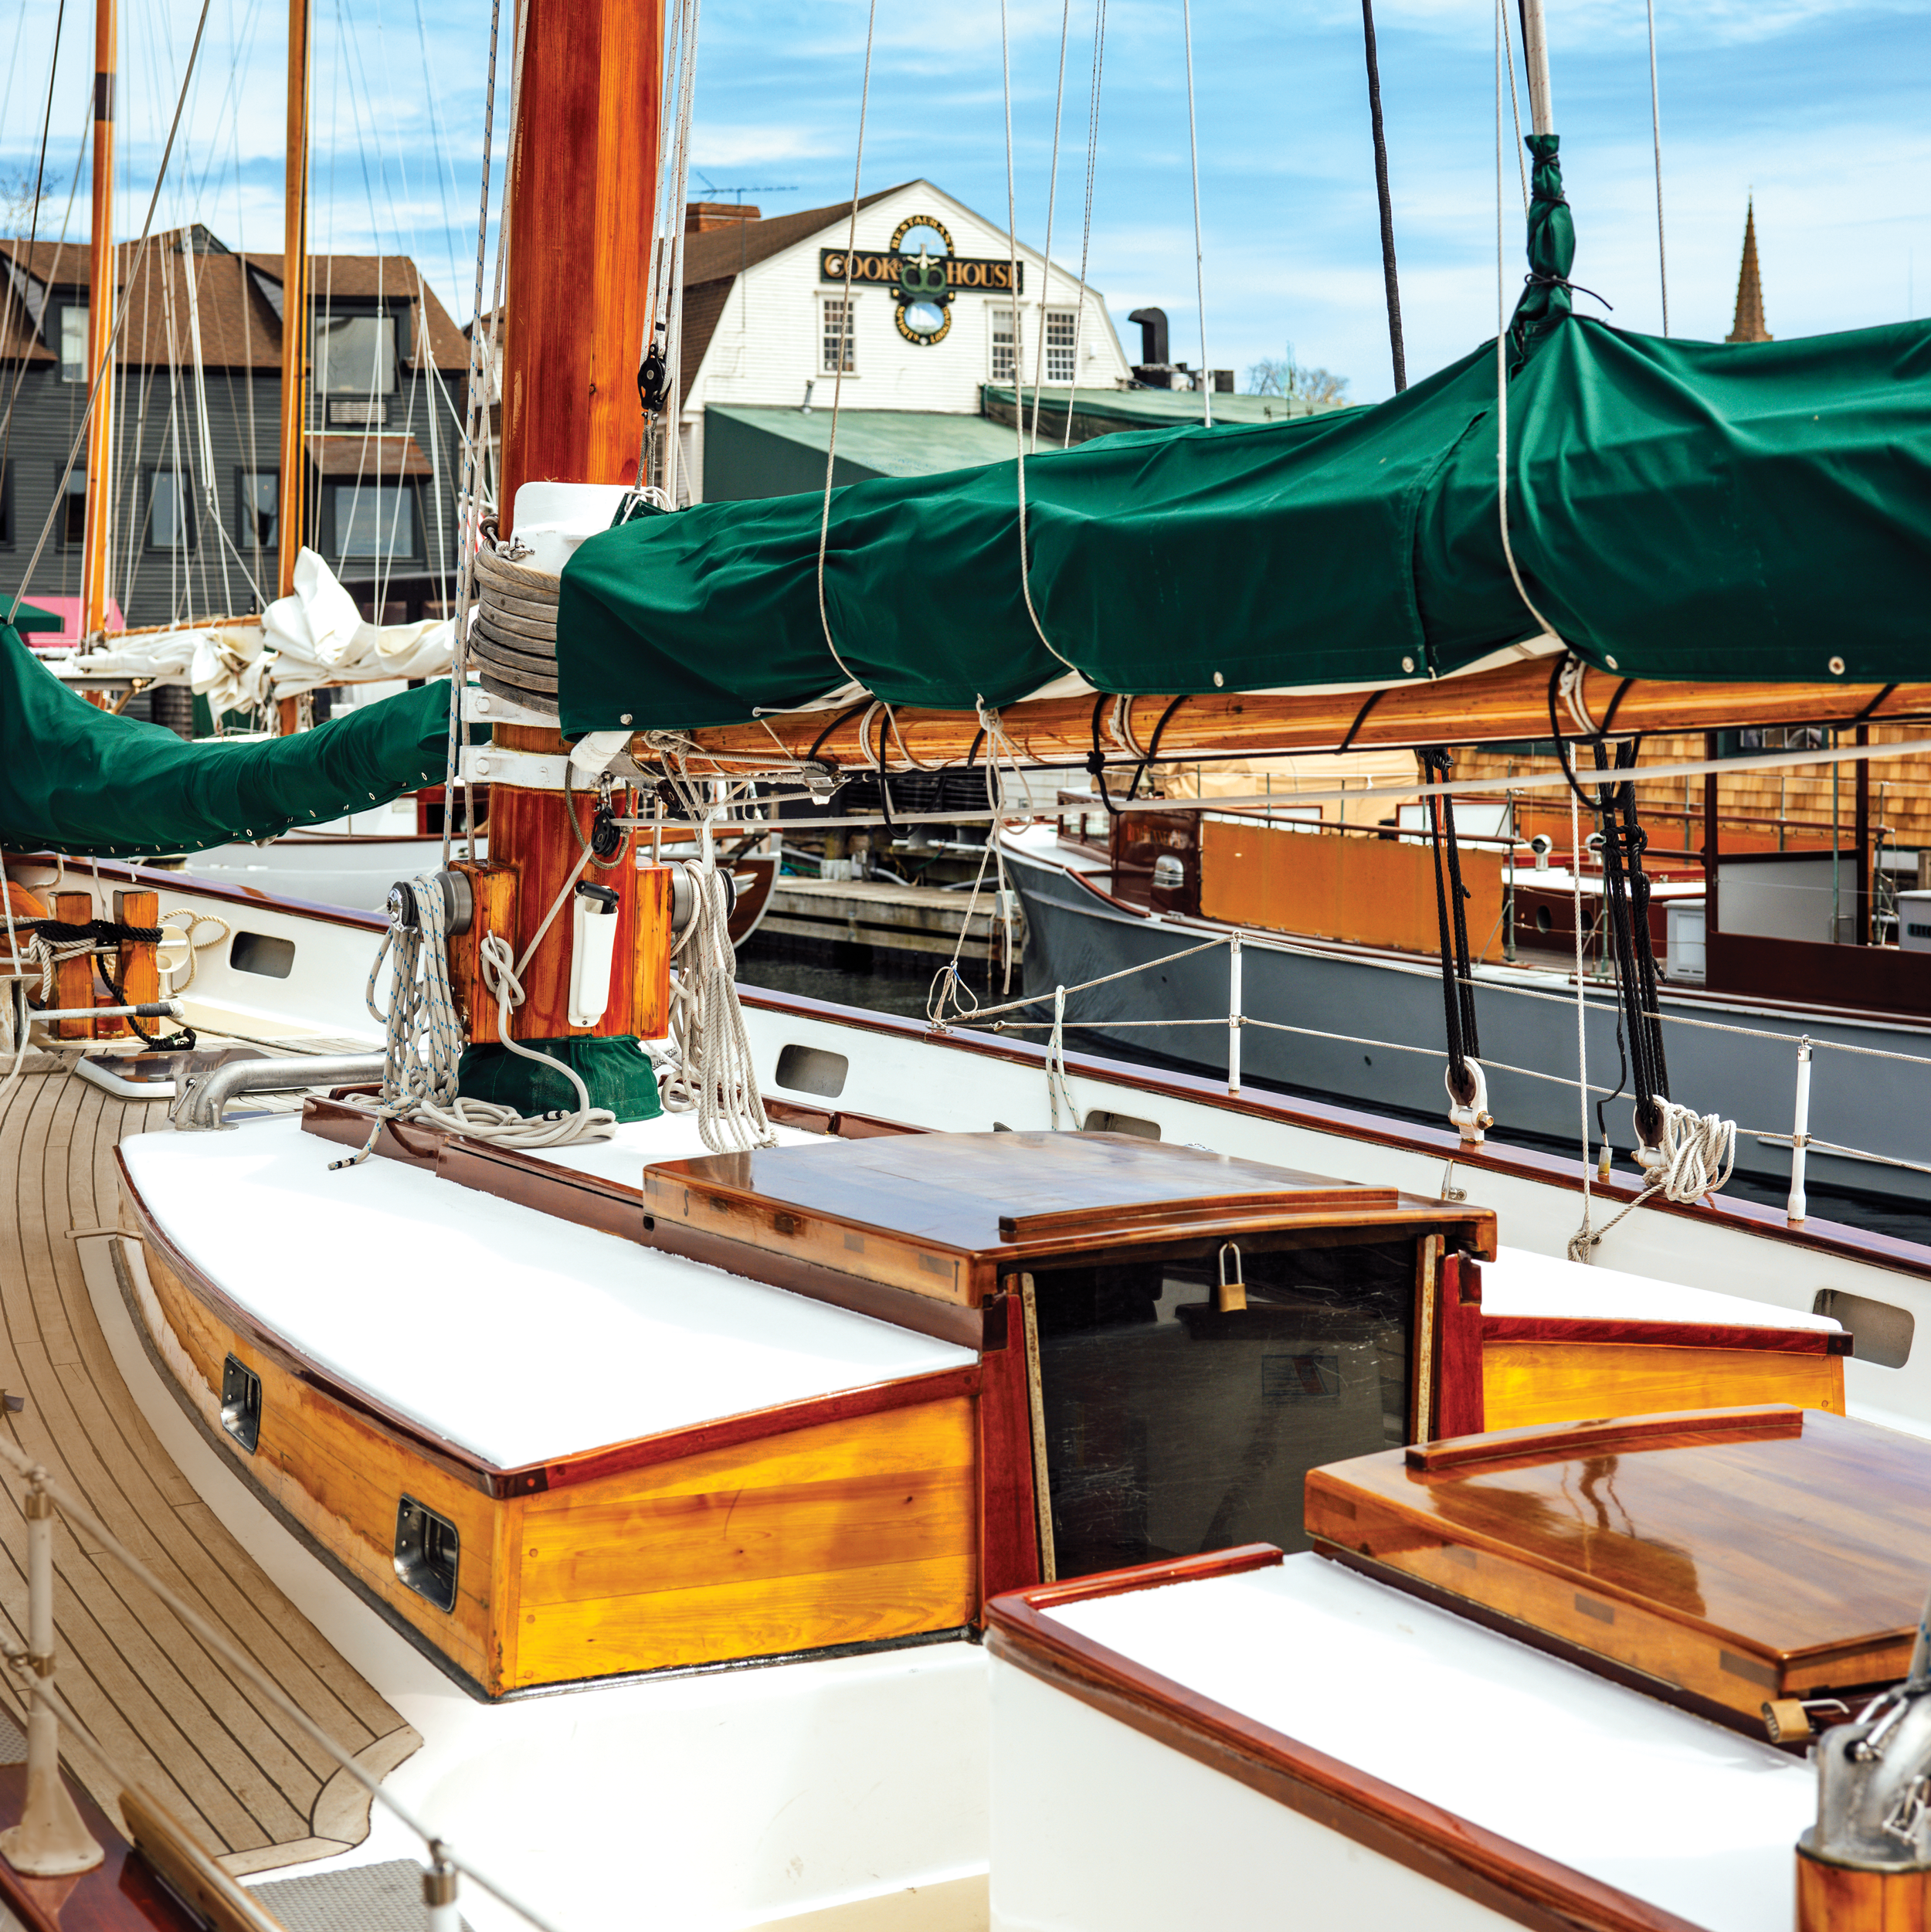 InPickleball | Go There | Set sail in Newport Harbor